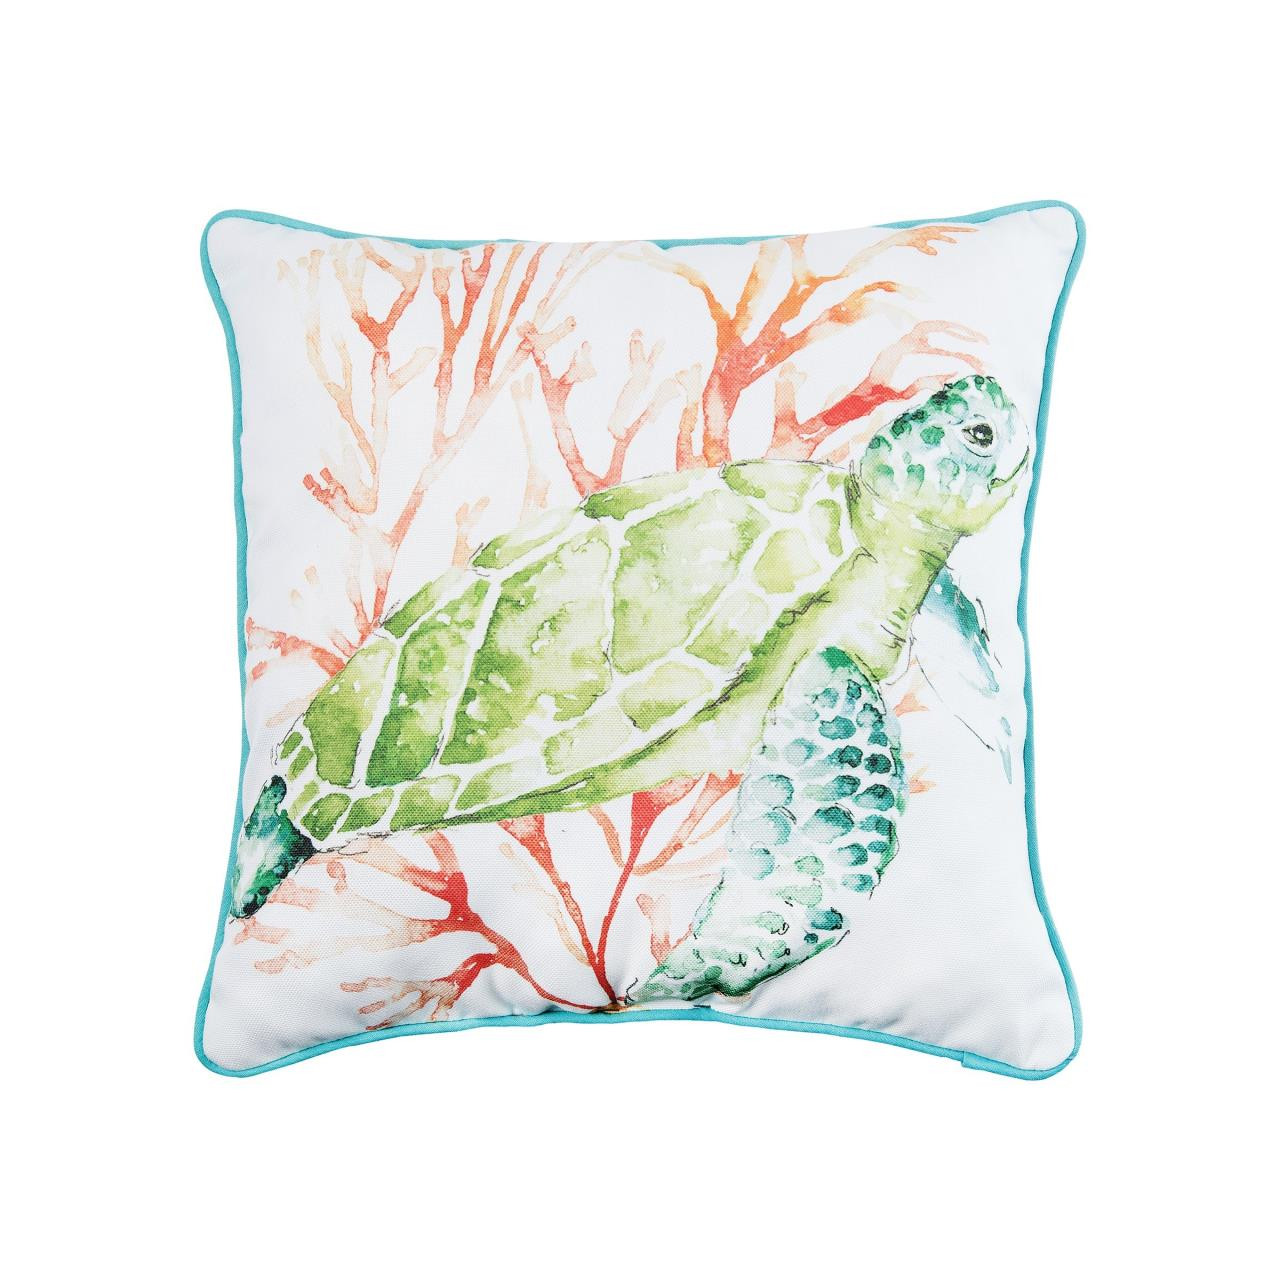 Colorful Sea Turtle Pillow - 008246739692